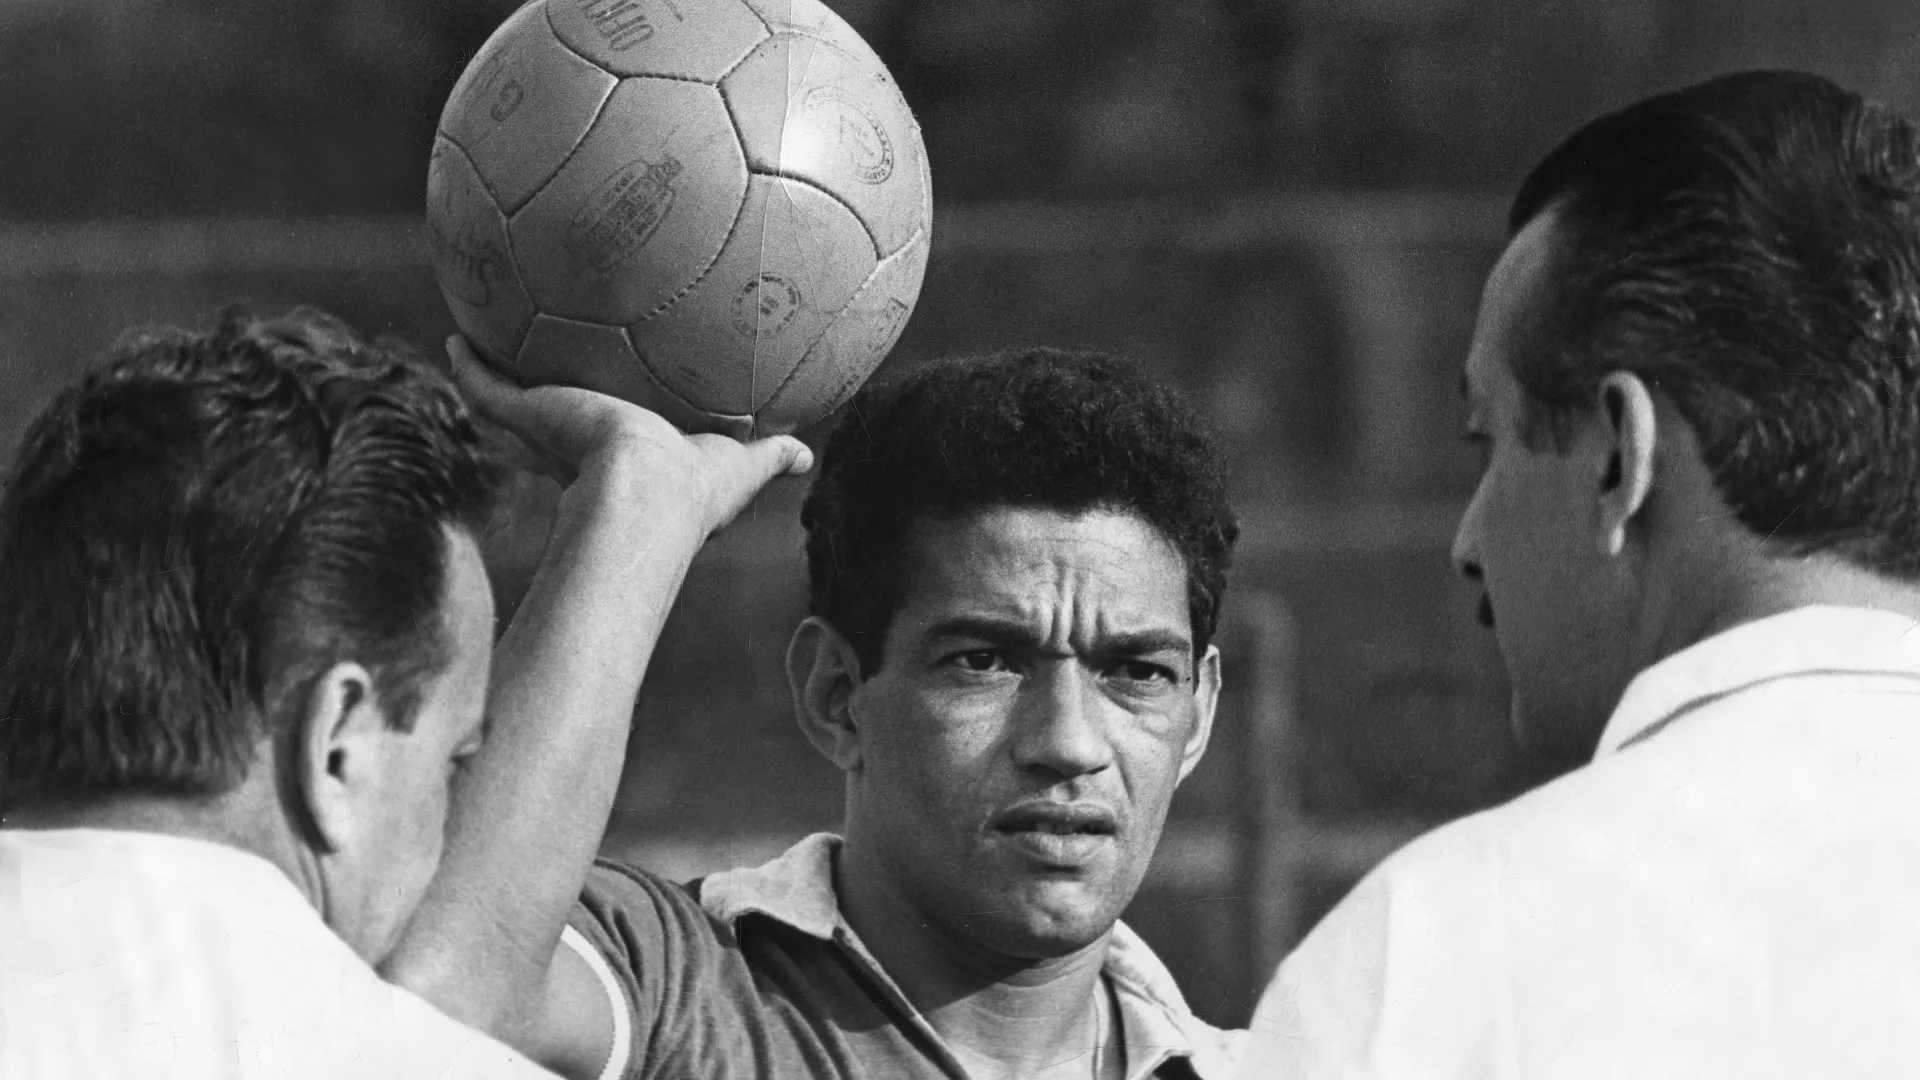 Garrincha Bio: Biography, Wiki, Age, Career, Footballer, Football Record, Wife & More